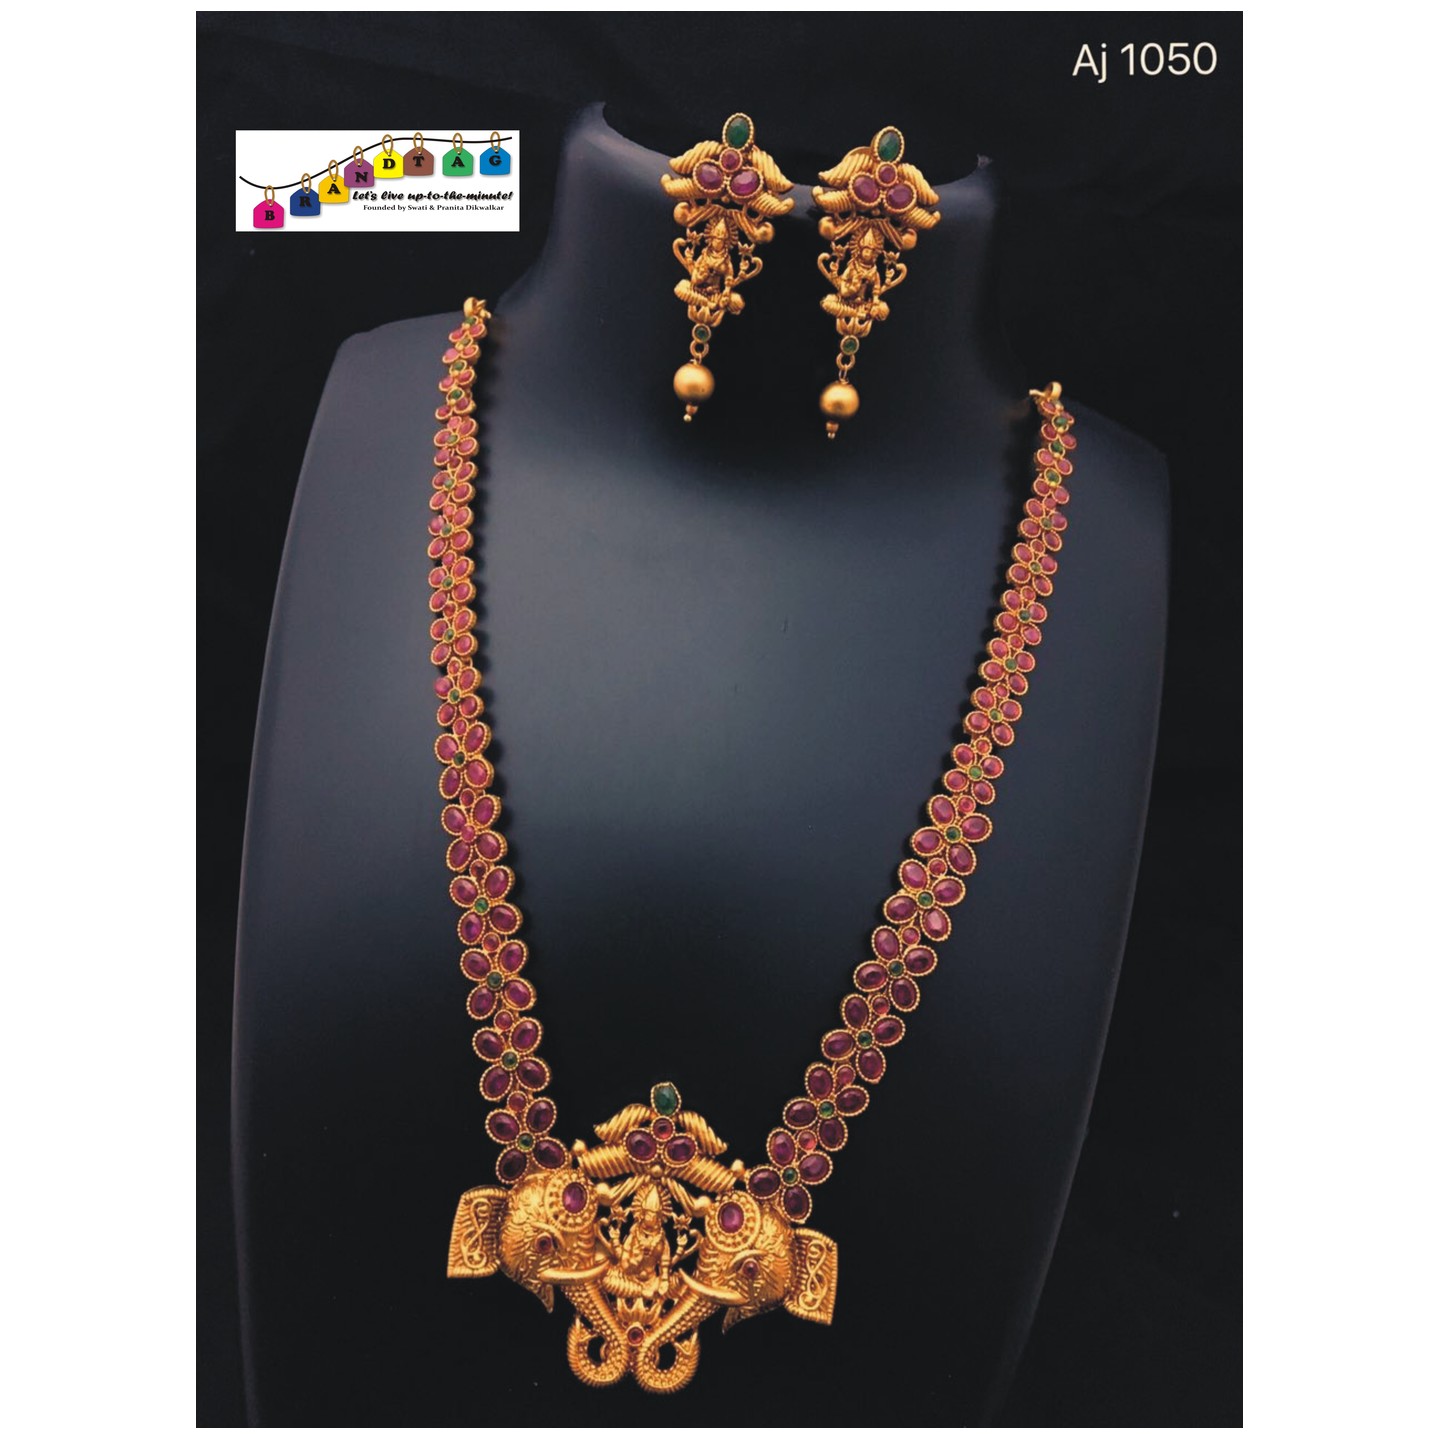 Beautiful Golden Baahubali Necklace set!!